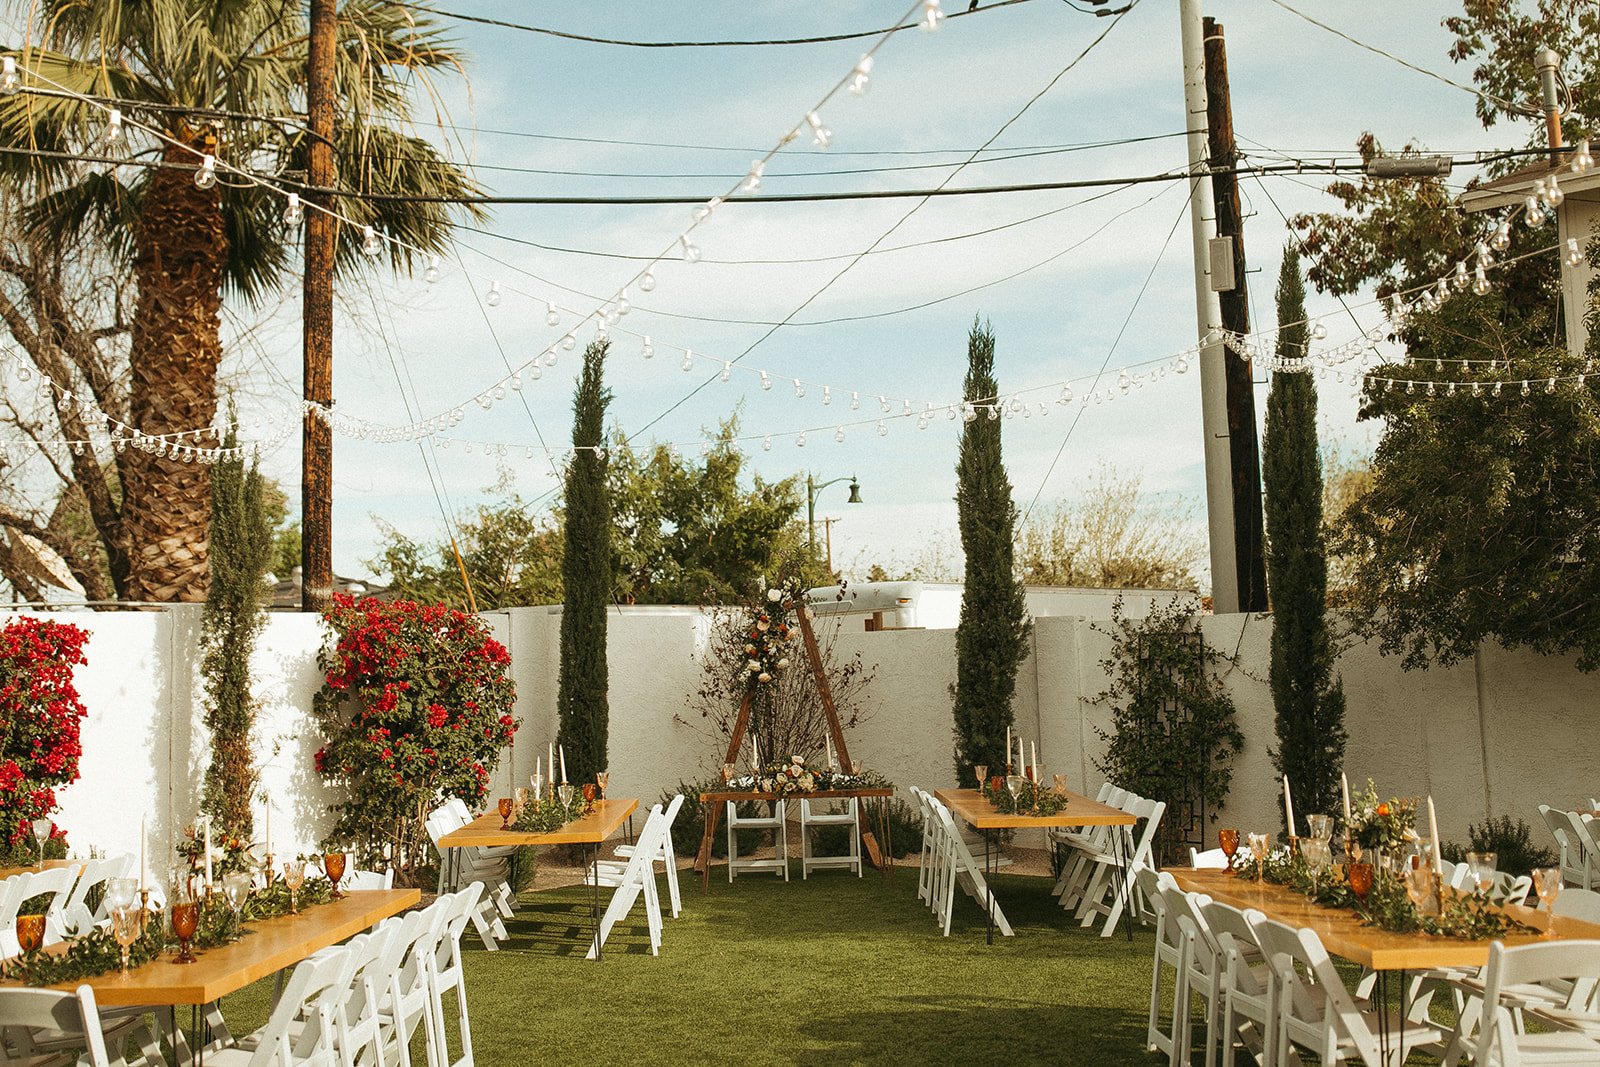 Dreamy outdoor Arizona wedding photos